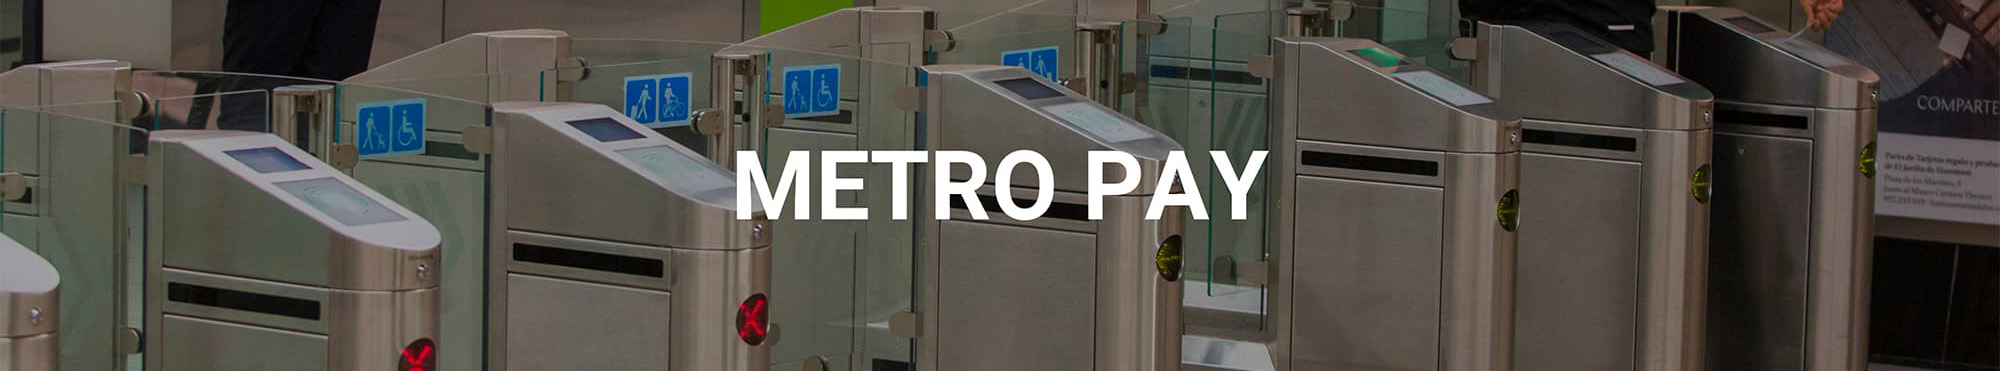 Cabecera Metro Pay